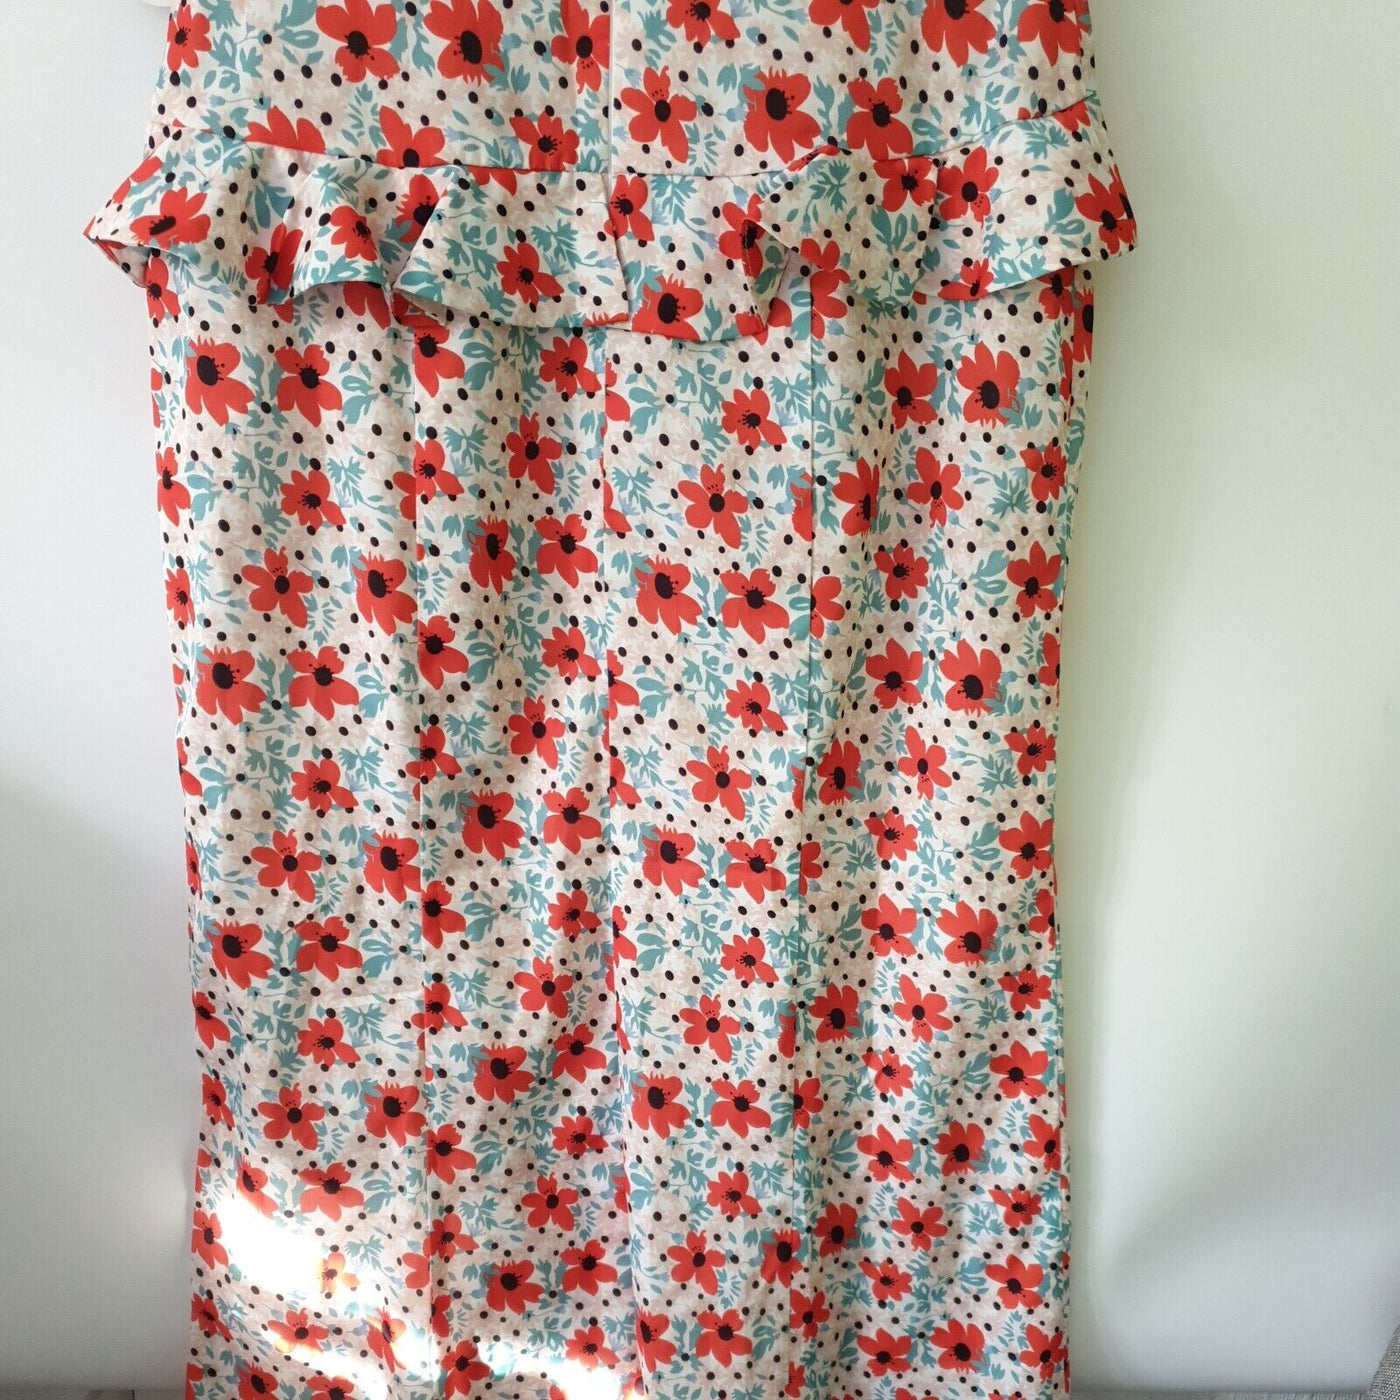 Chi Chi London Short Sleeve Floral Print Midi Day Dress Cream UK 8 **** V234